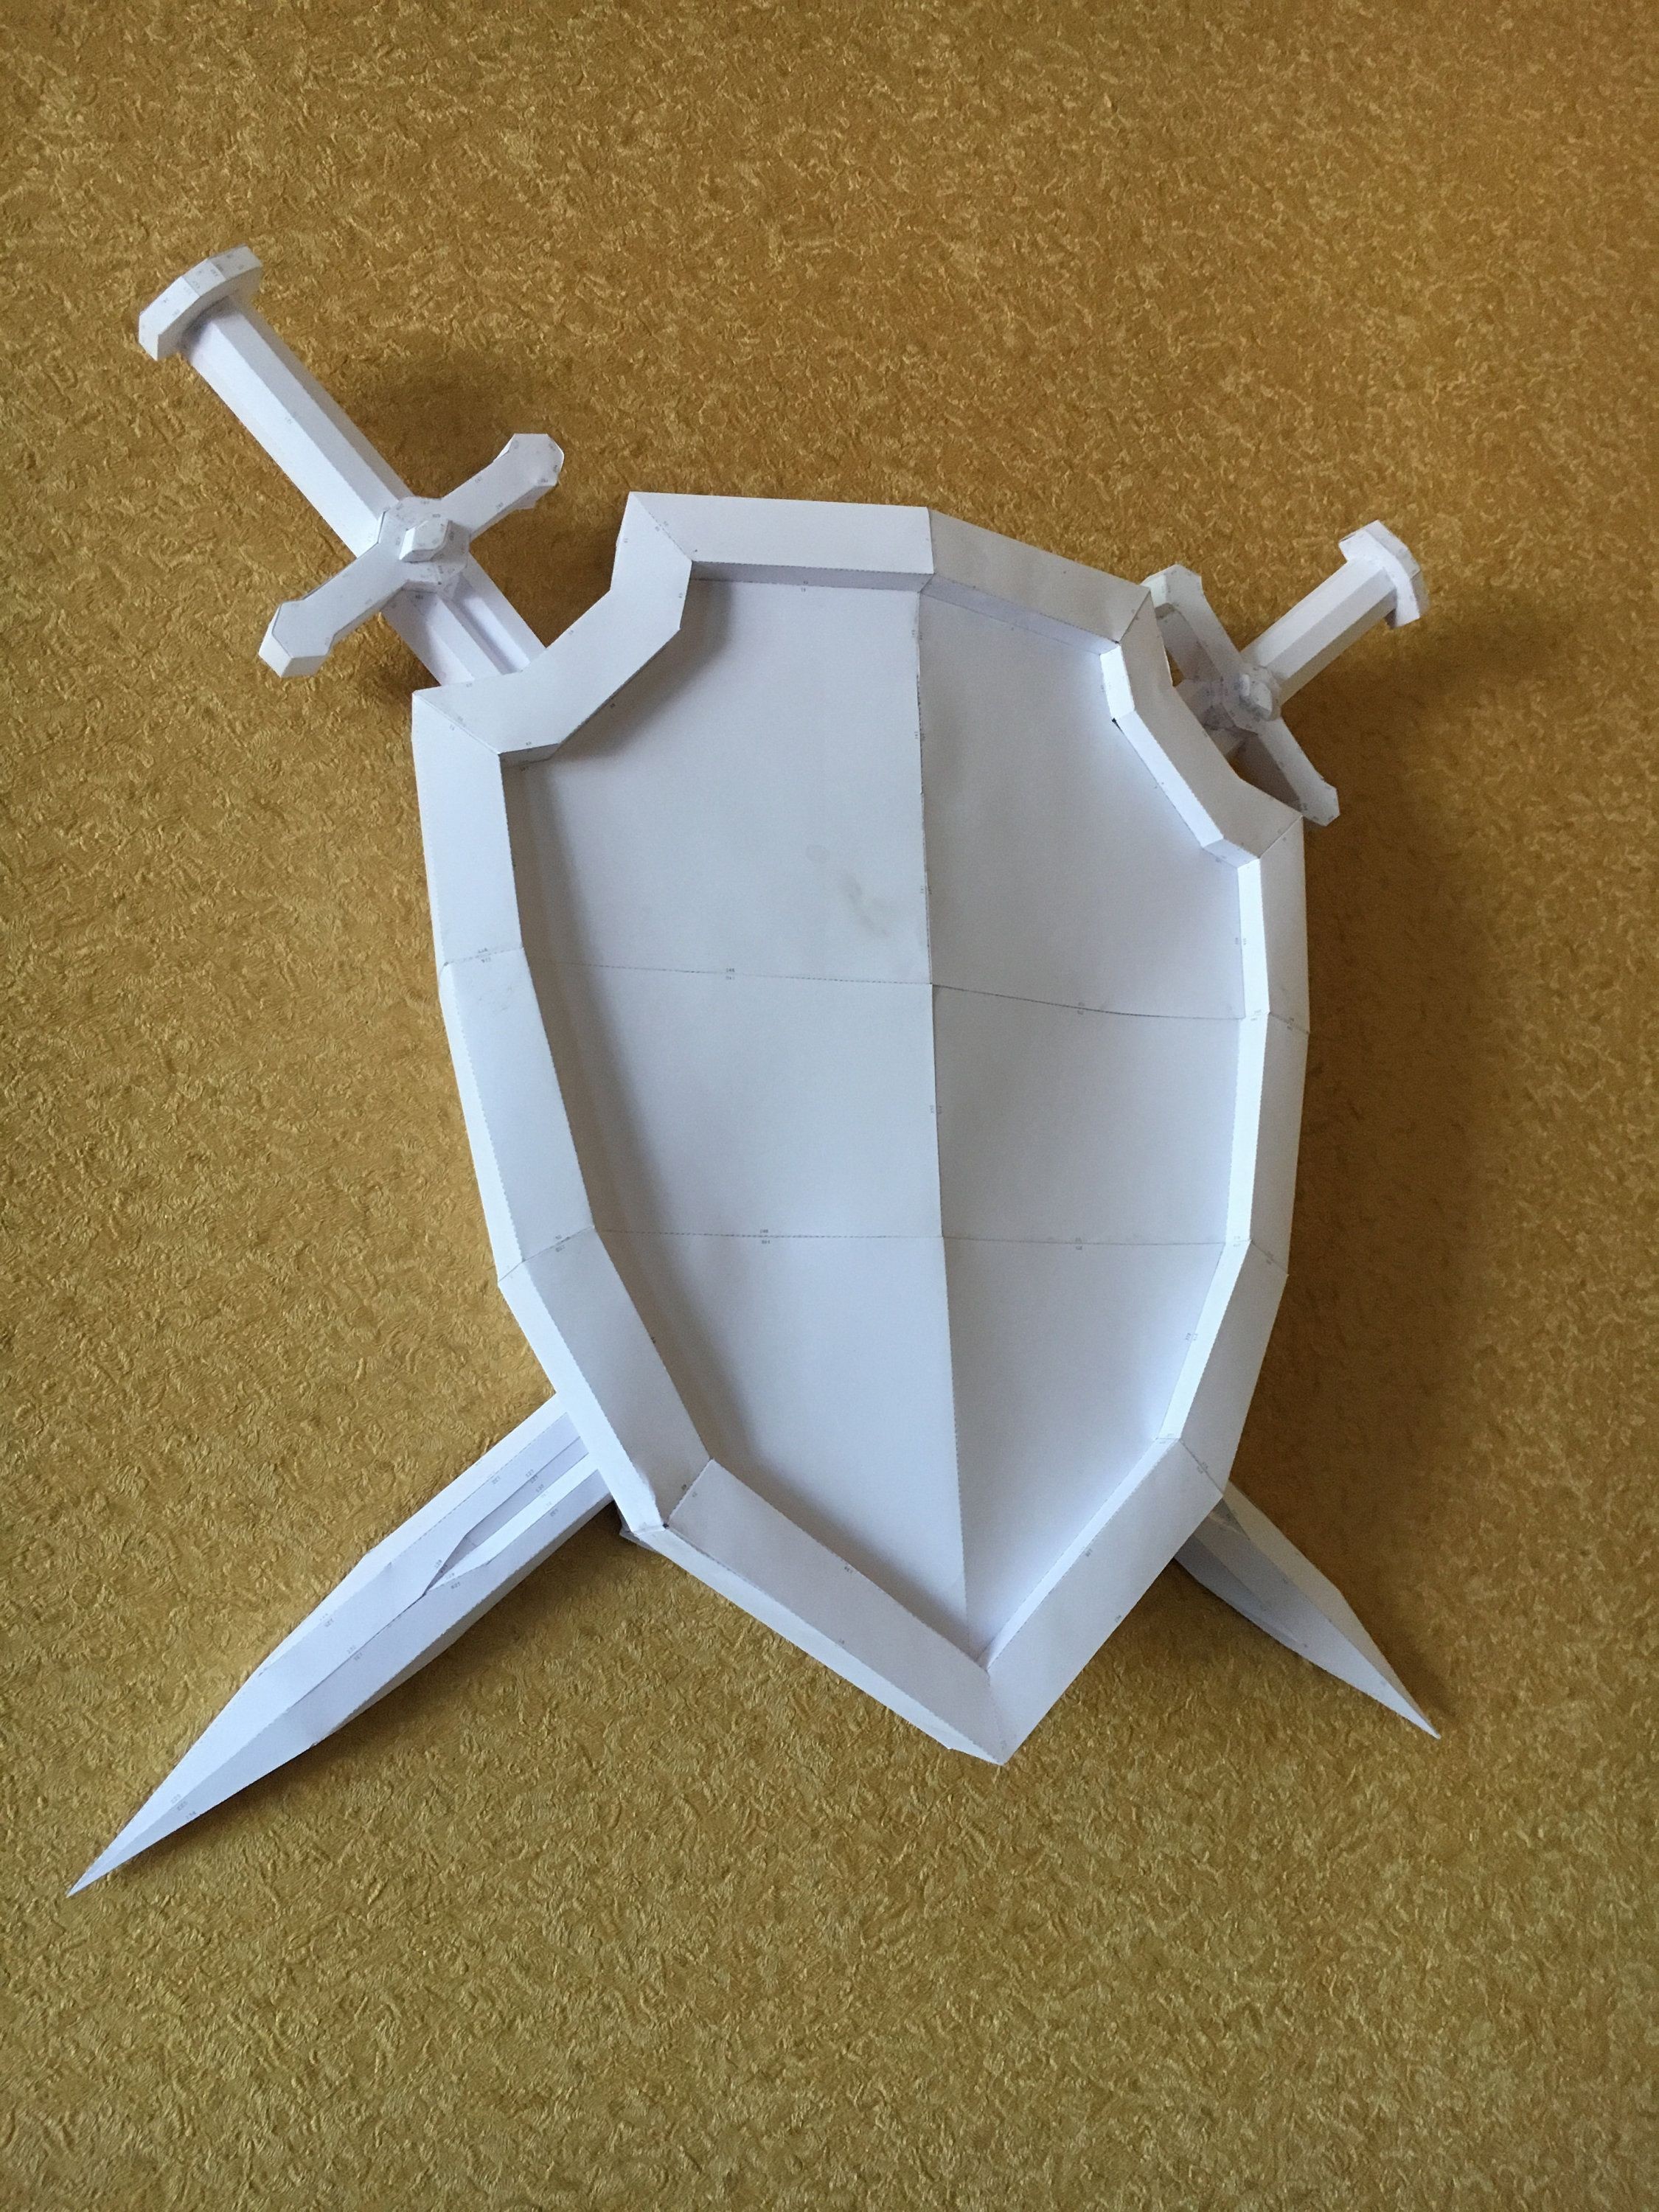 Papercraft Shark Sword Shield Diy Papercraft Model ÐÑÐ¼Ð°Ð¶Ð½ÑÐµ Ð¸Ð·Ð´ÐµÐ Ð¸Ñ